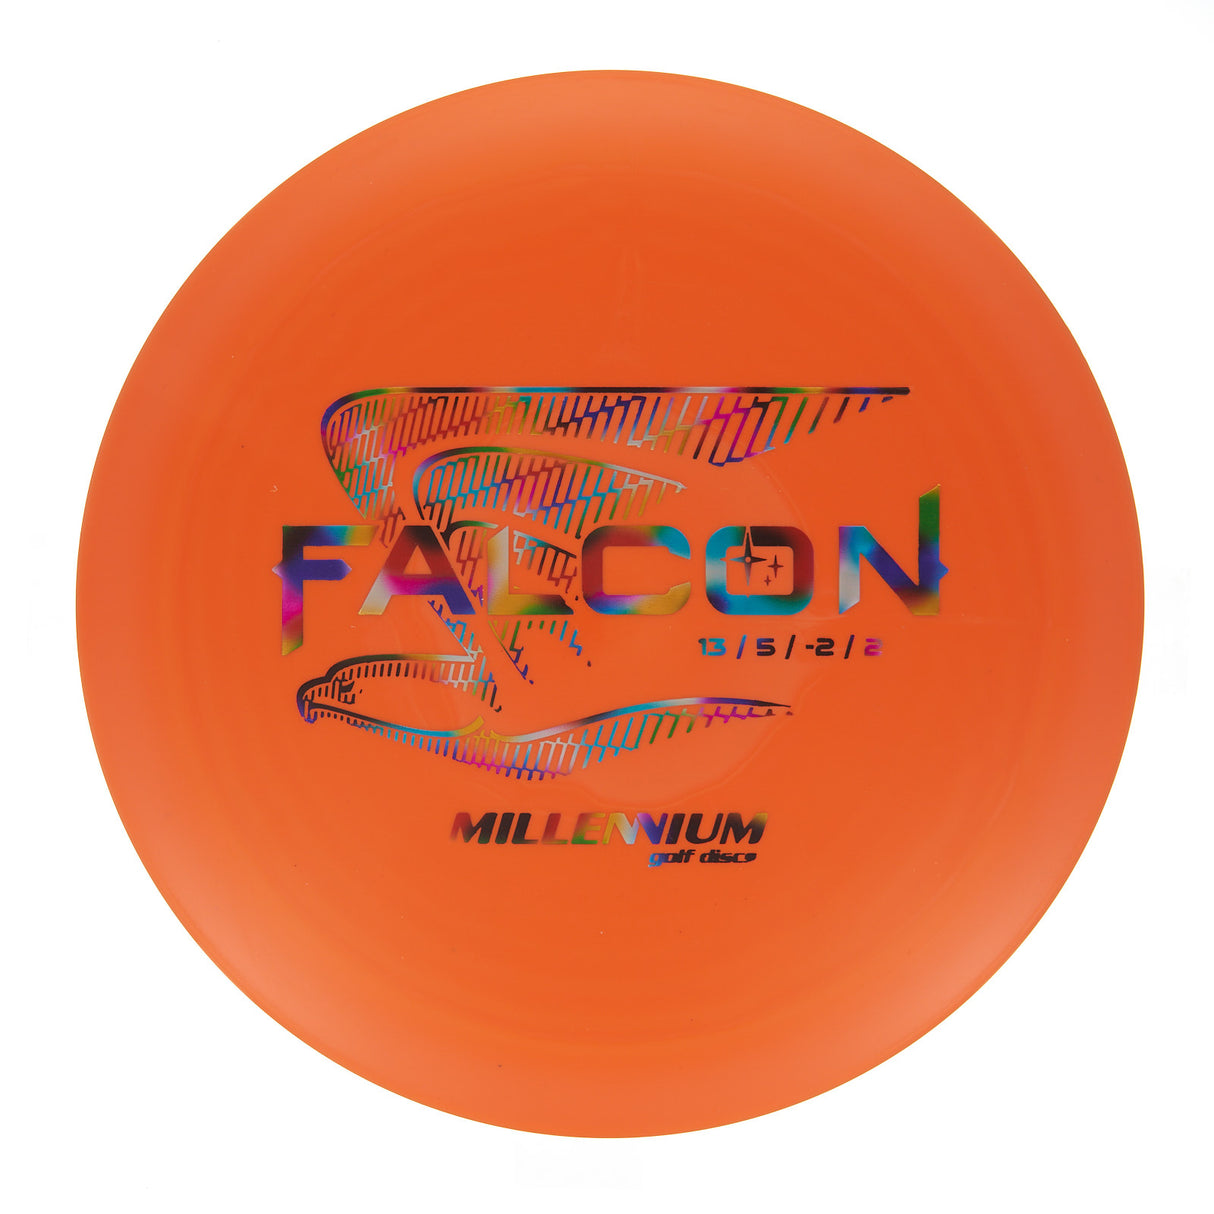 Millennium Falcon - Standard 175g | Style 0001